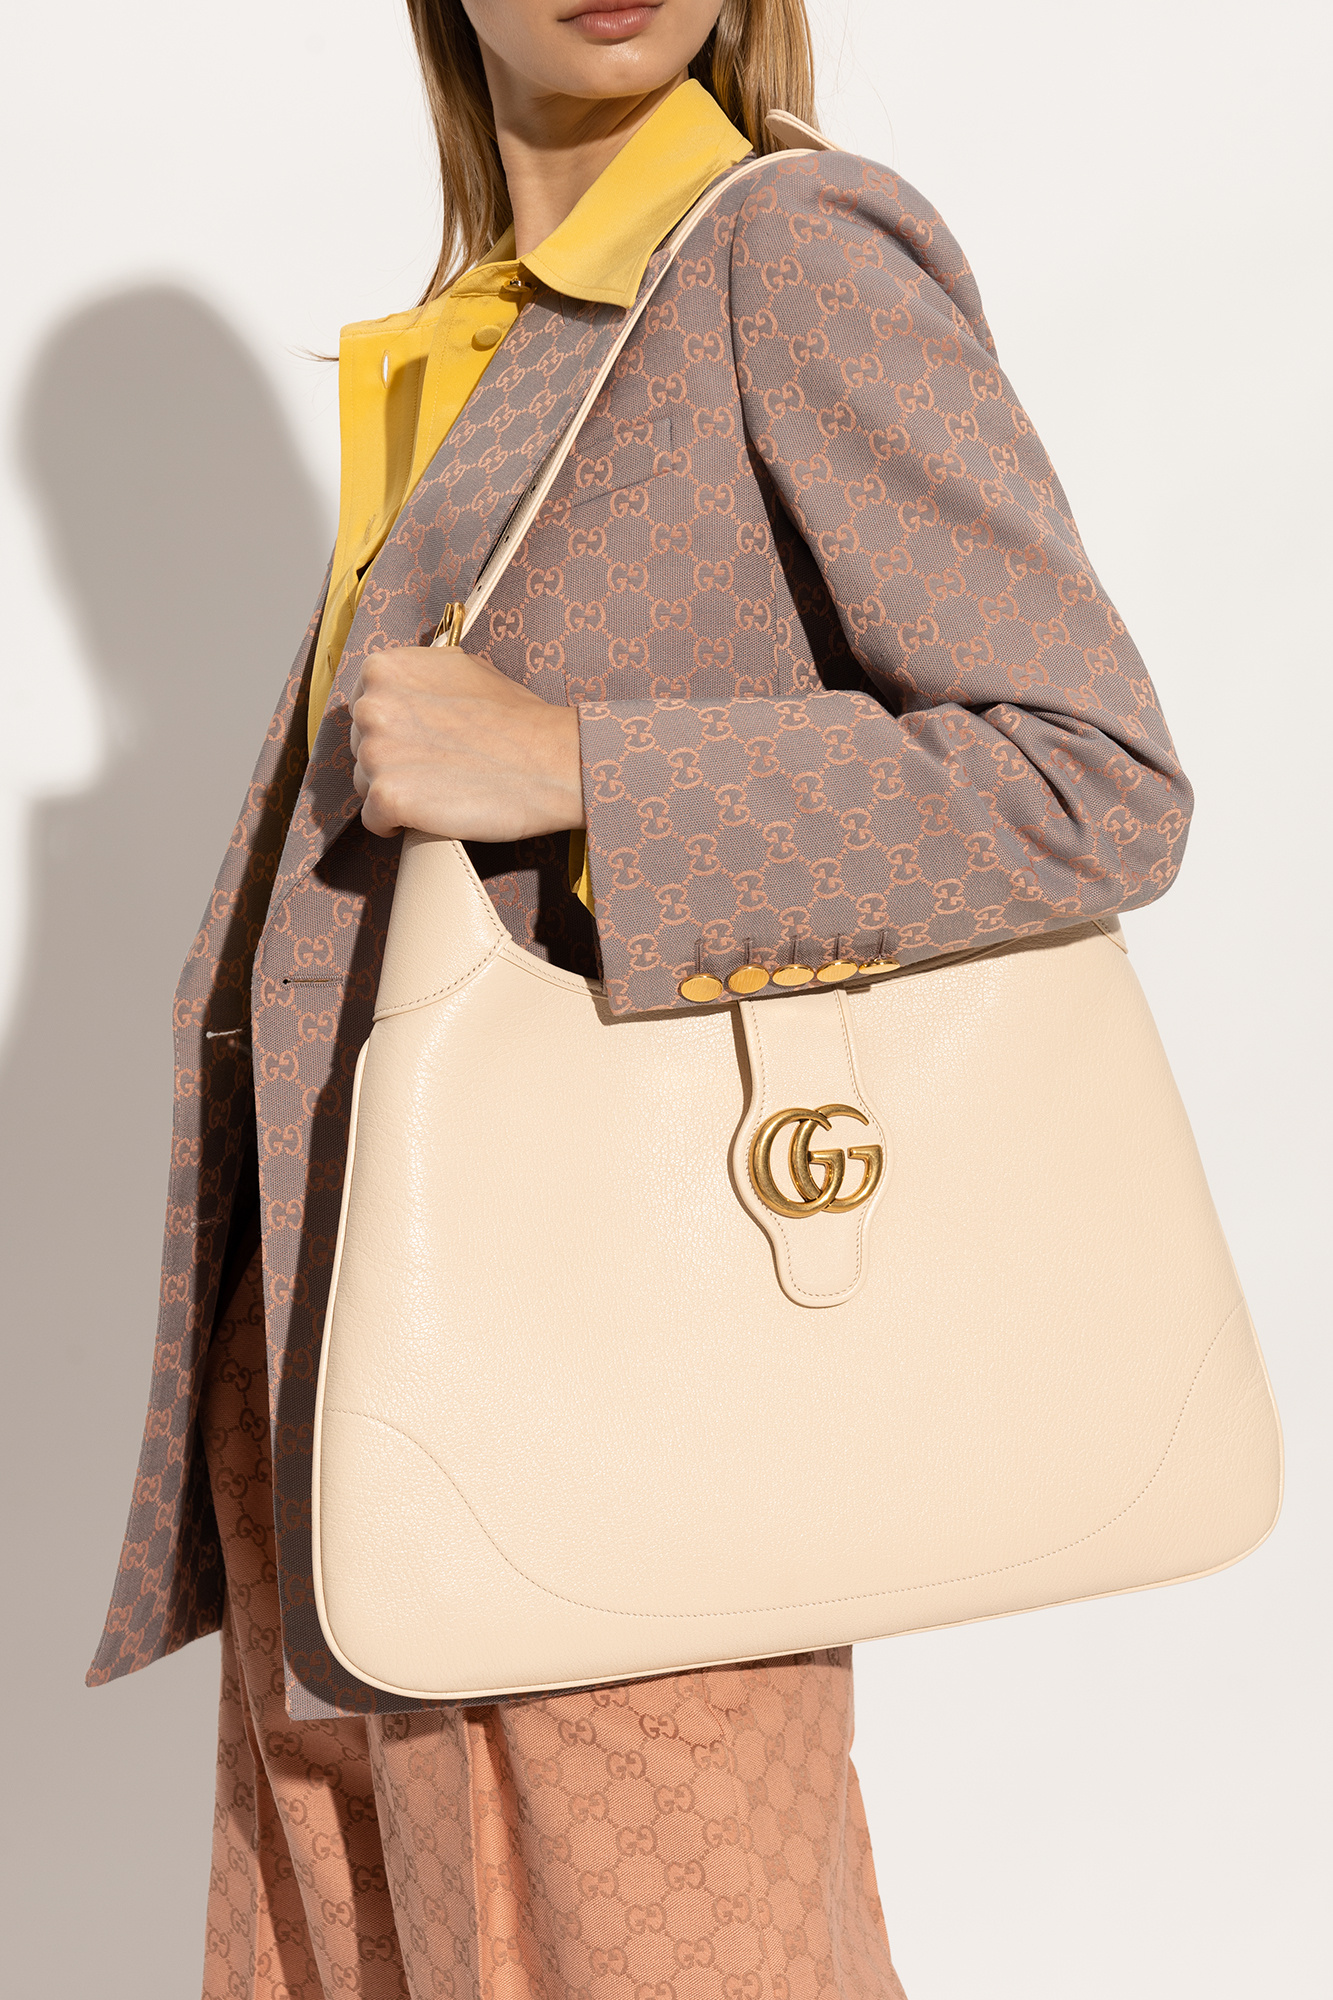 Gucci Aphrodite Medium Shoulder Bag in Beige